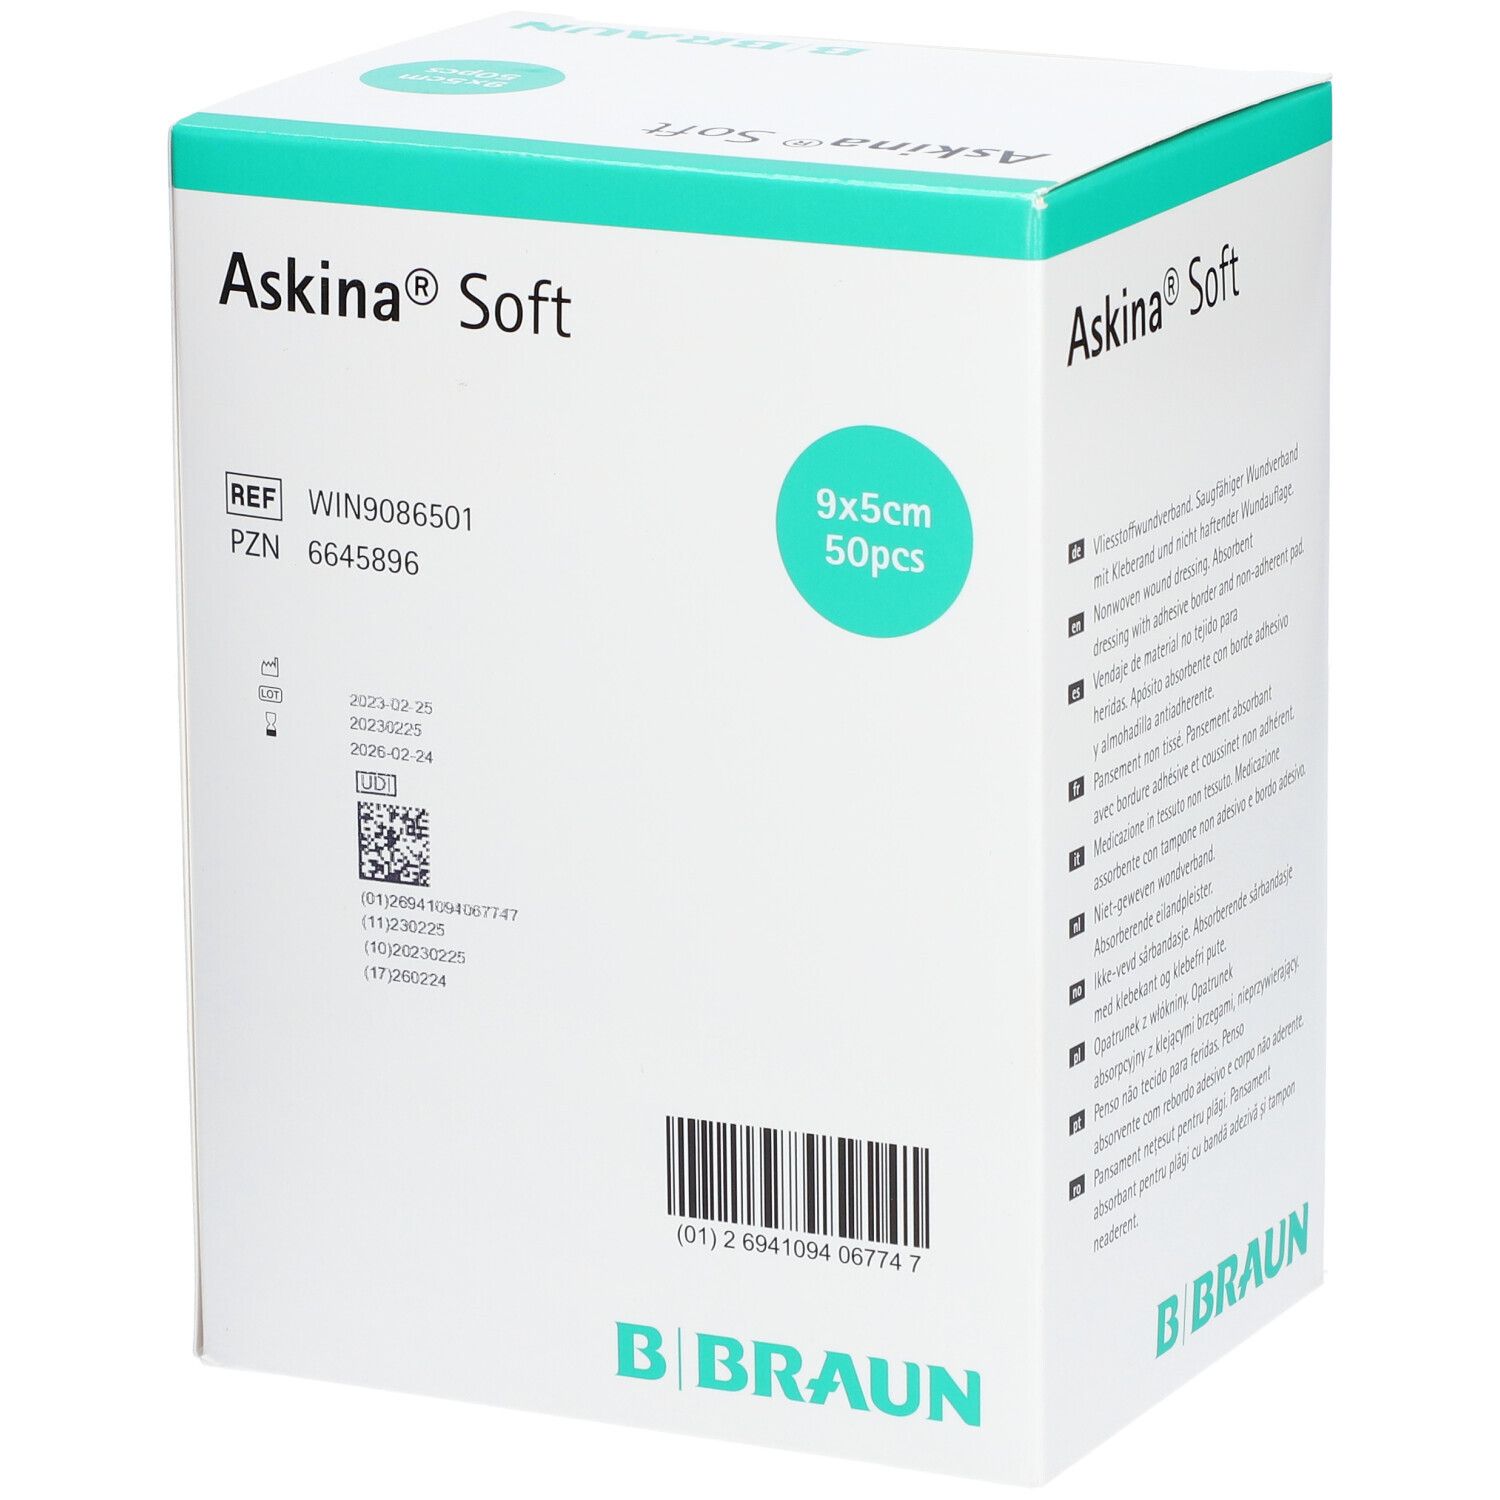 Askina® Soft Wundverband 9 x 5 cm steril